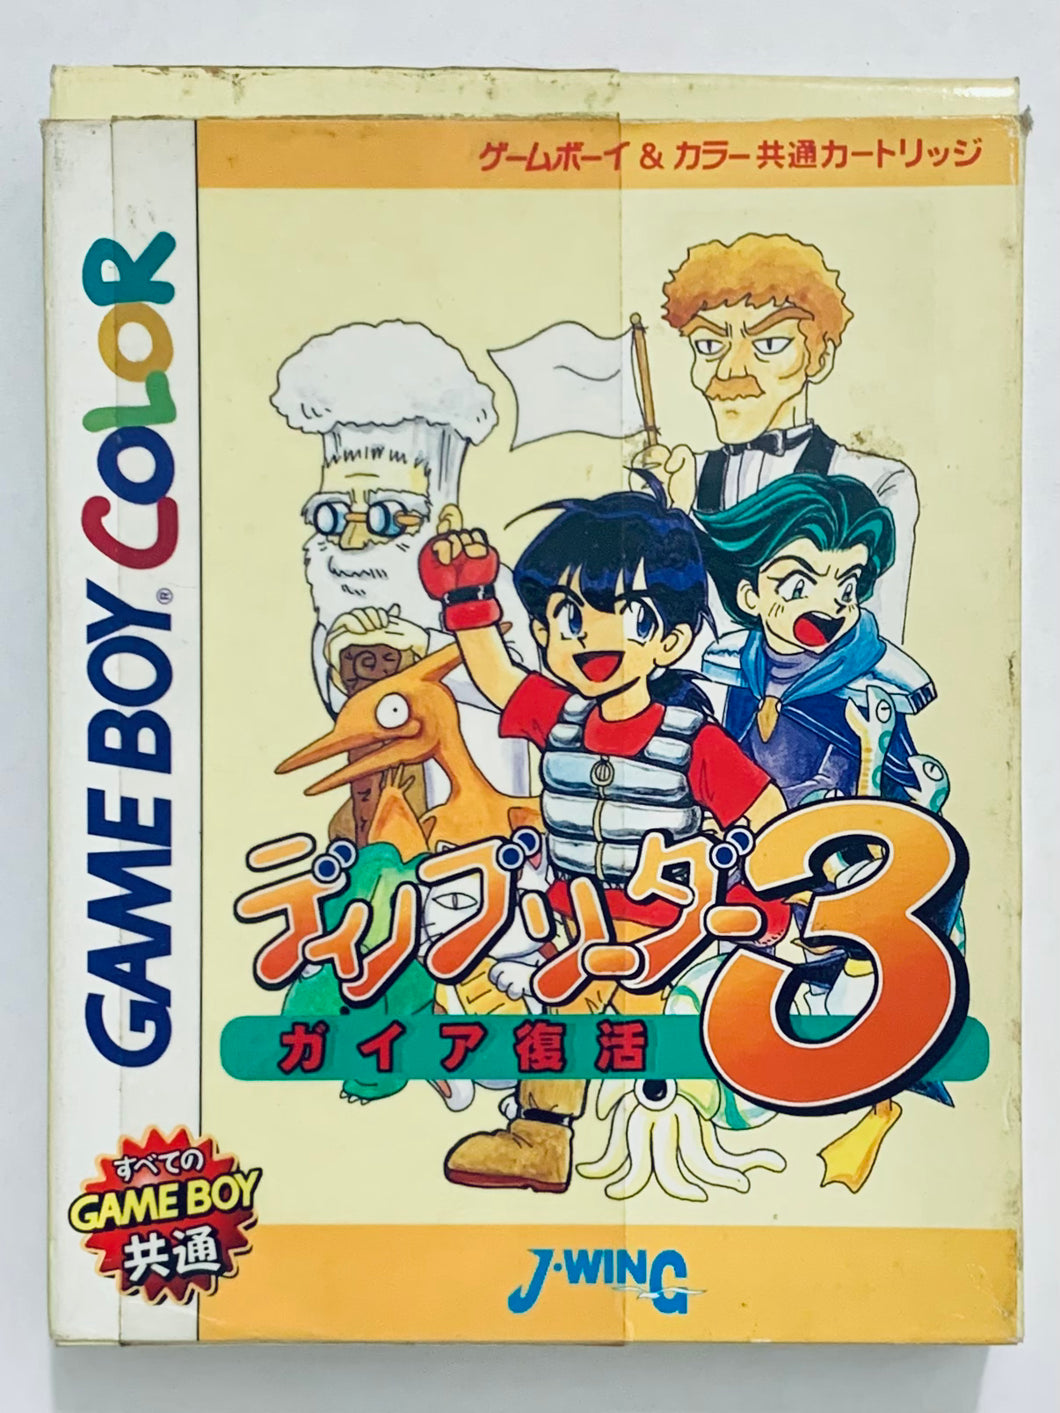 Dino Breeder 3: Gaia Fukkatsu - GameBoy Color - Game Boy - Pocket - GBC - JP - CIB (DMG-A3DJ-JPN)